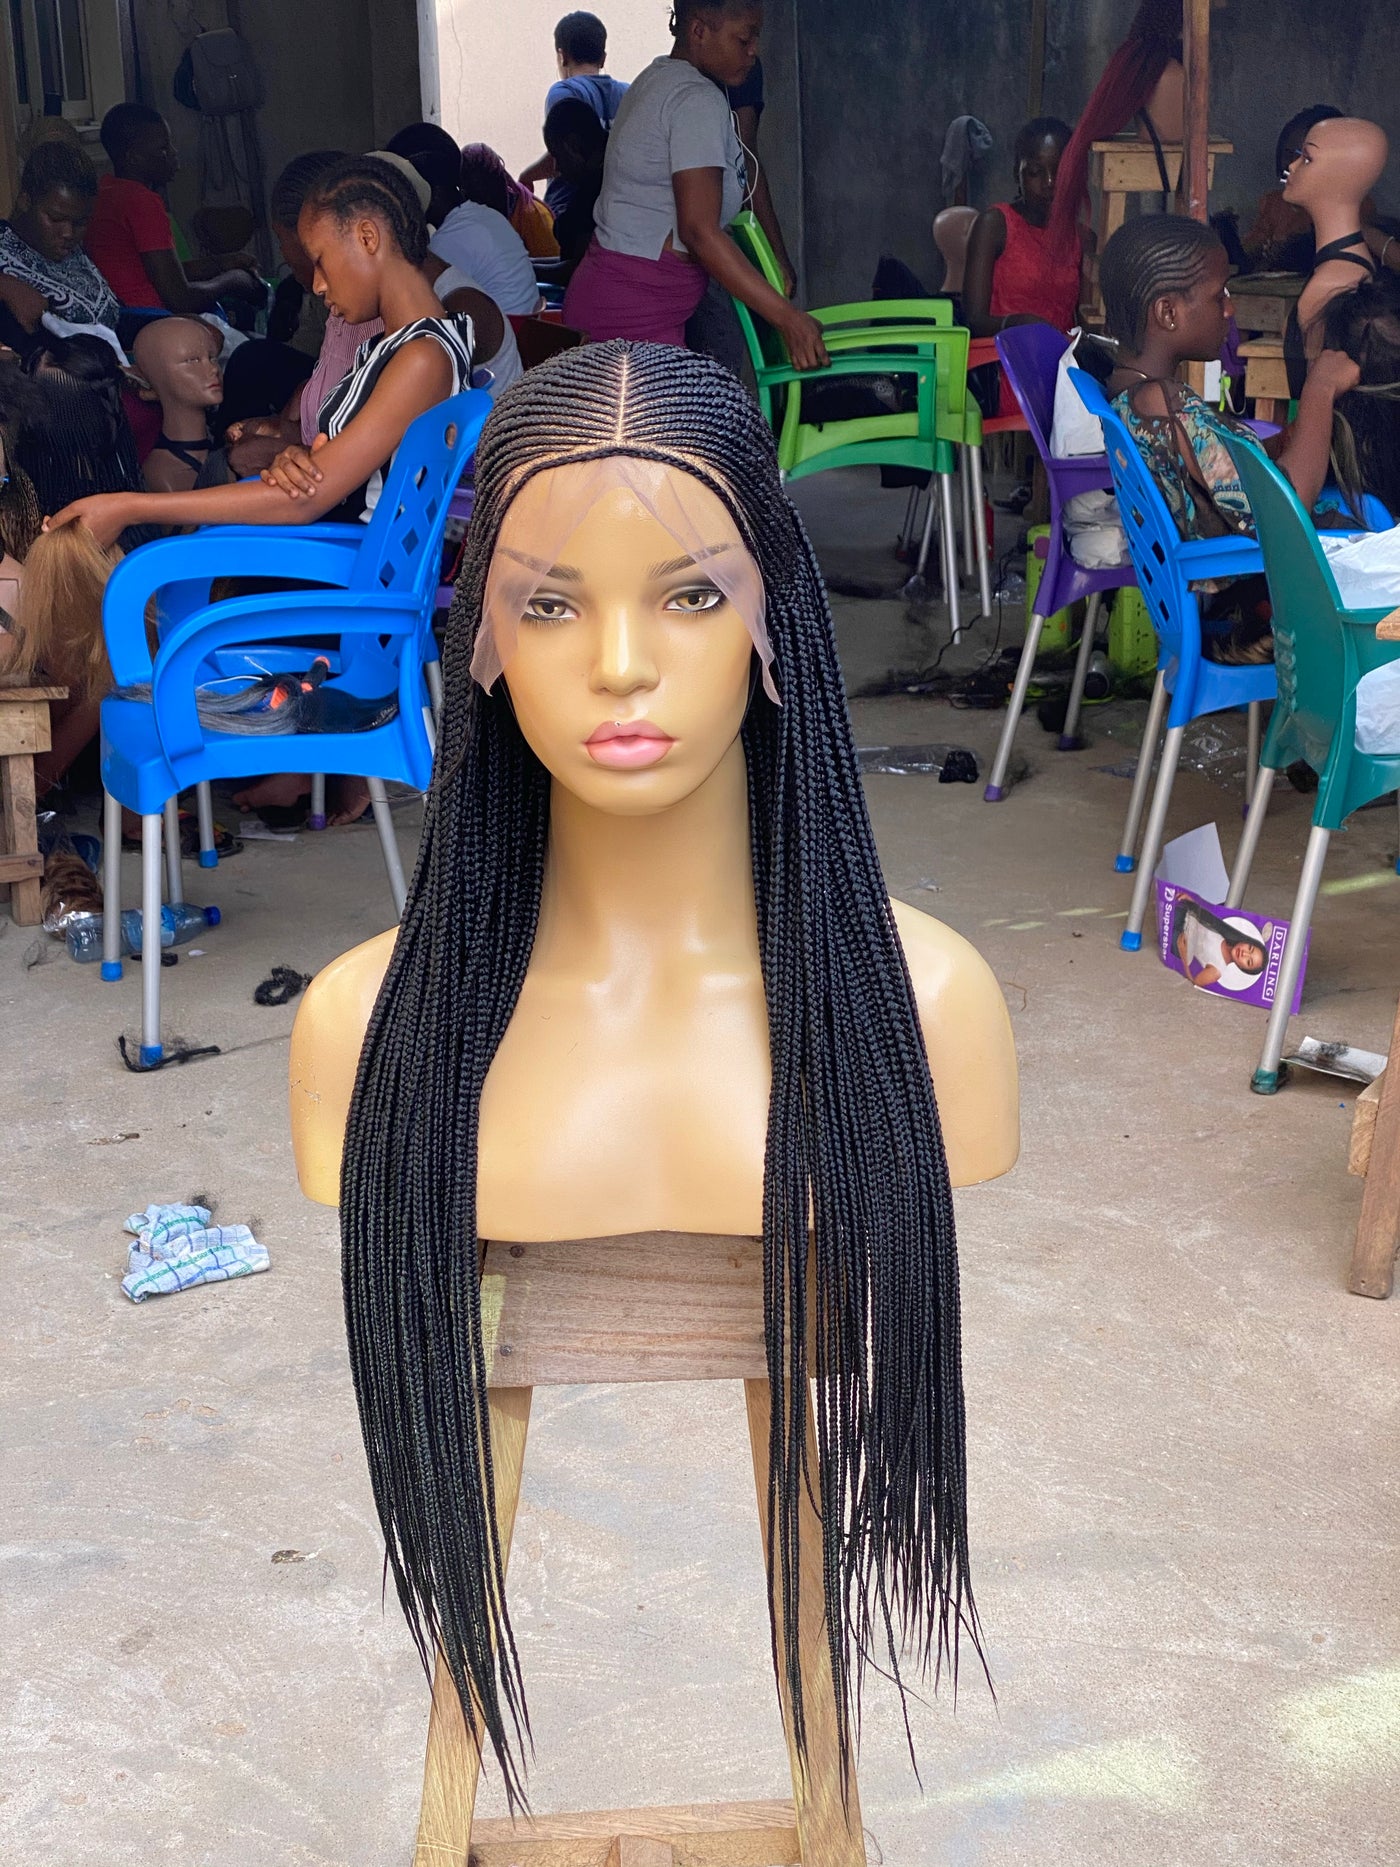 Cornrow Braid Wig - 13x6 Lace Frontal - Laraba Poshglad Braided Wigs Cornrow Braid Wig